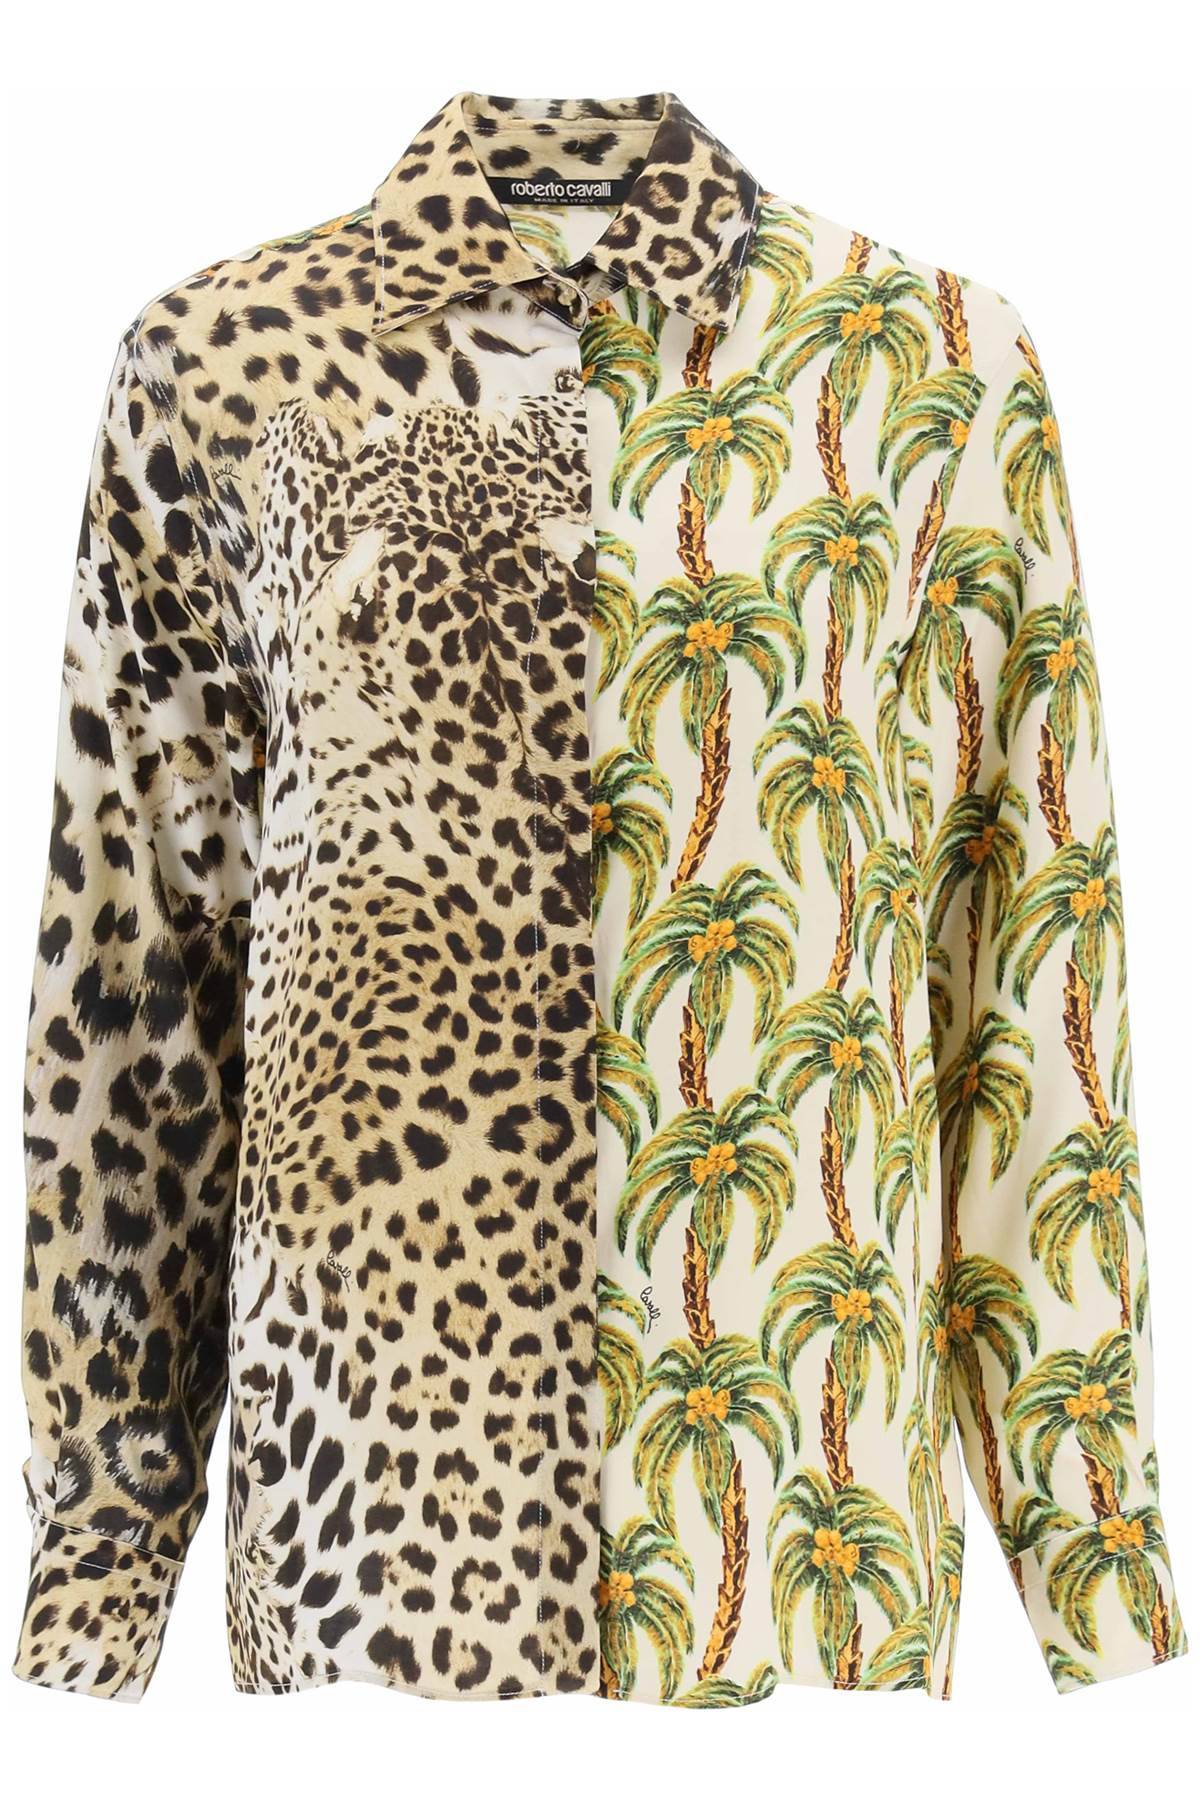 Roberto Cavalli ROBERTO CAVALLI jaguar and palm tree printed shirt